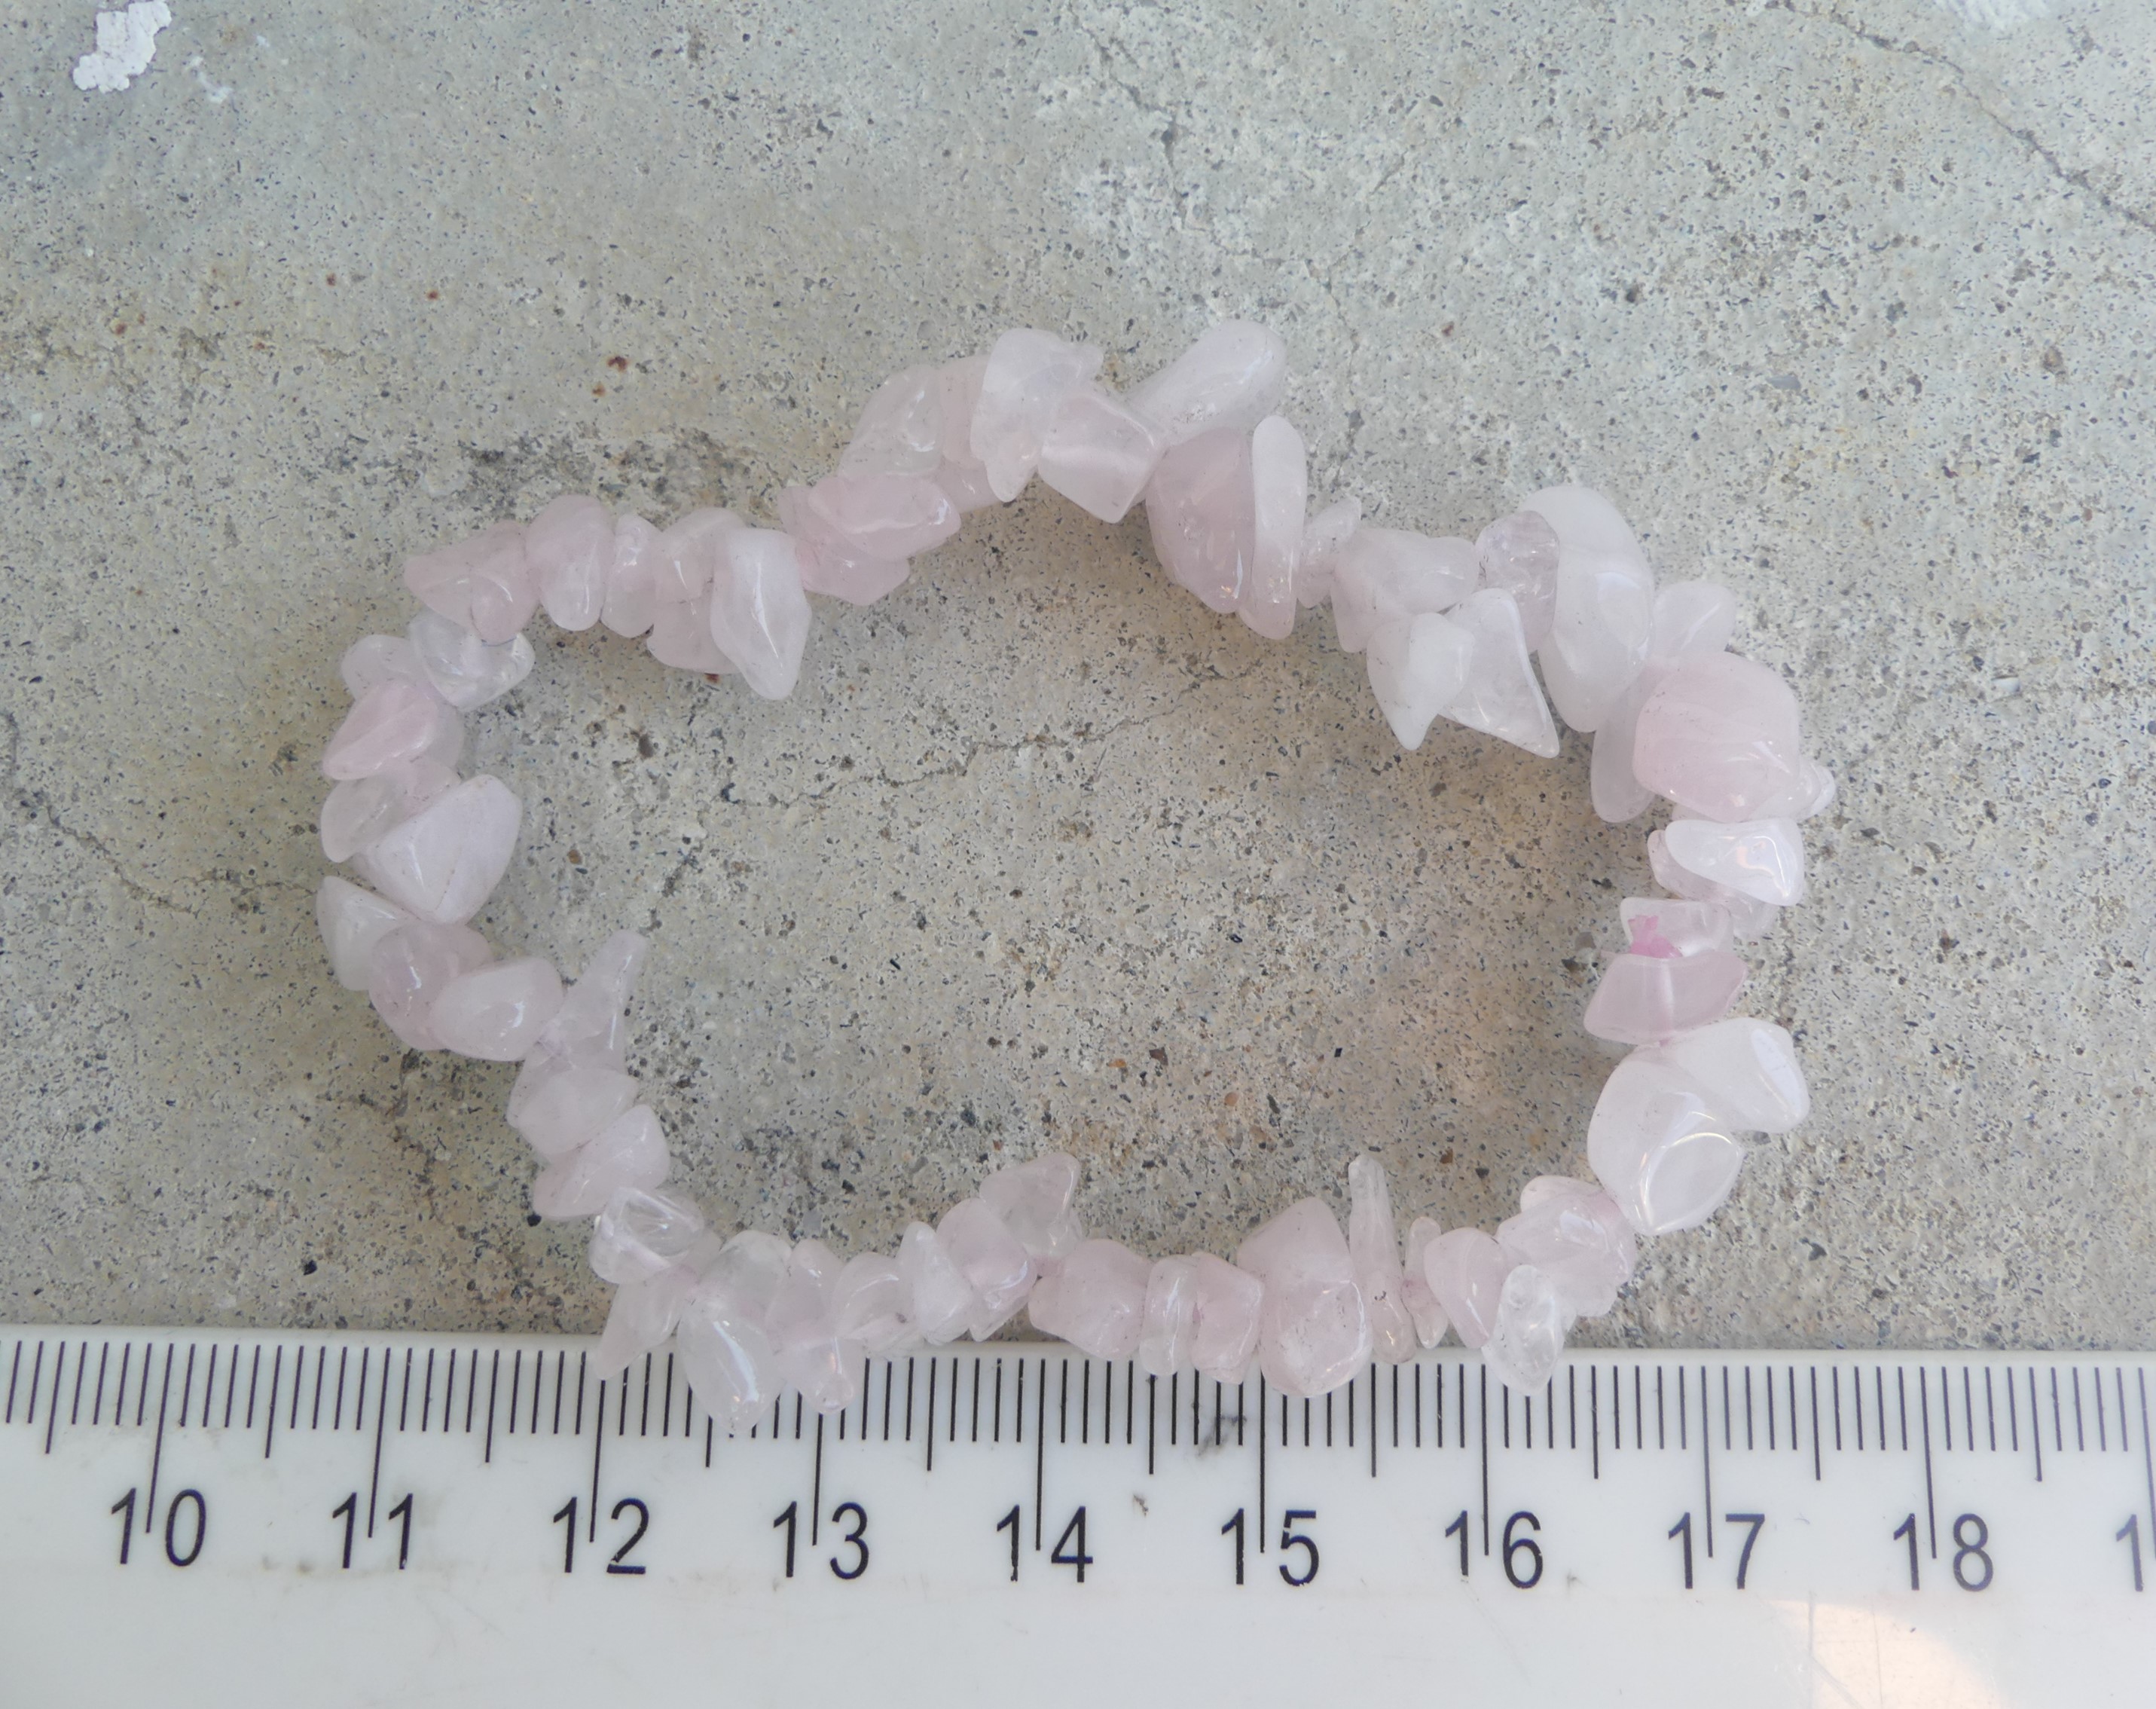 rose quartz chip bracelet